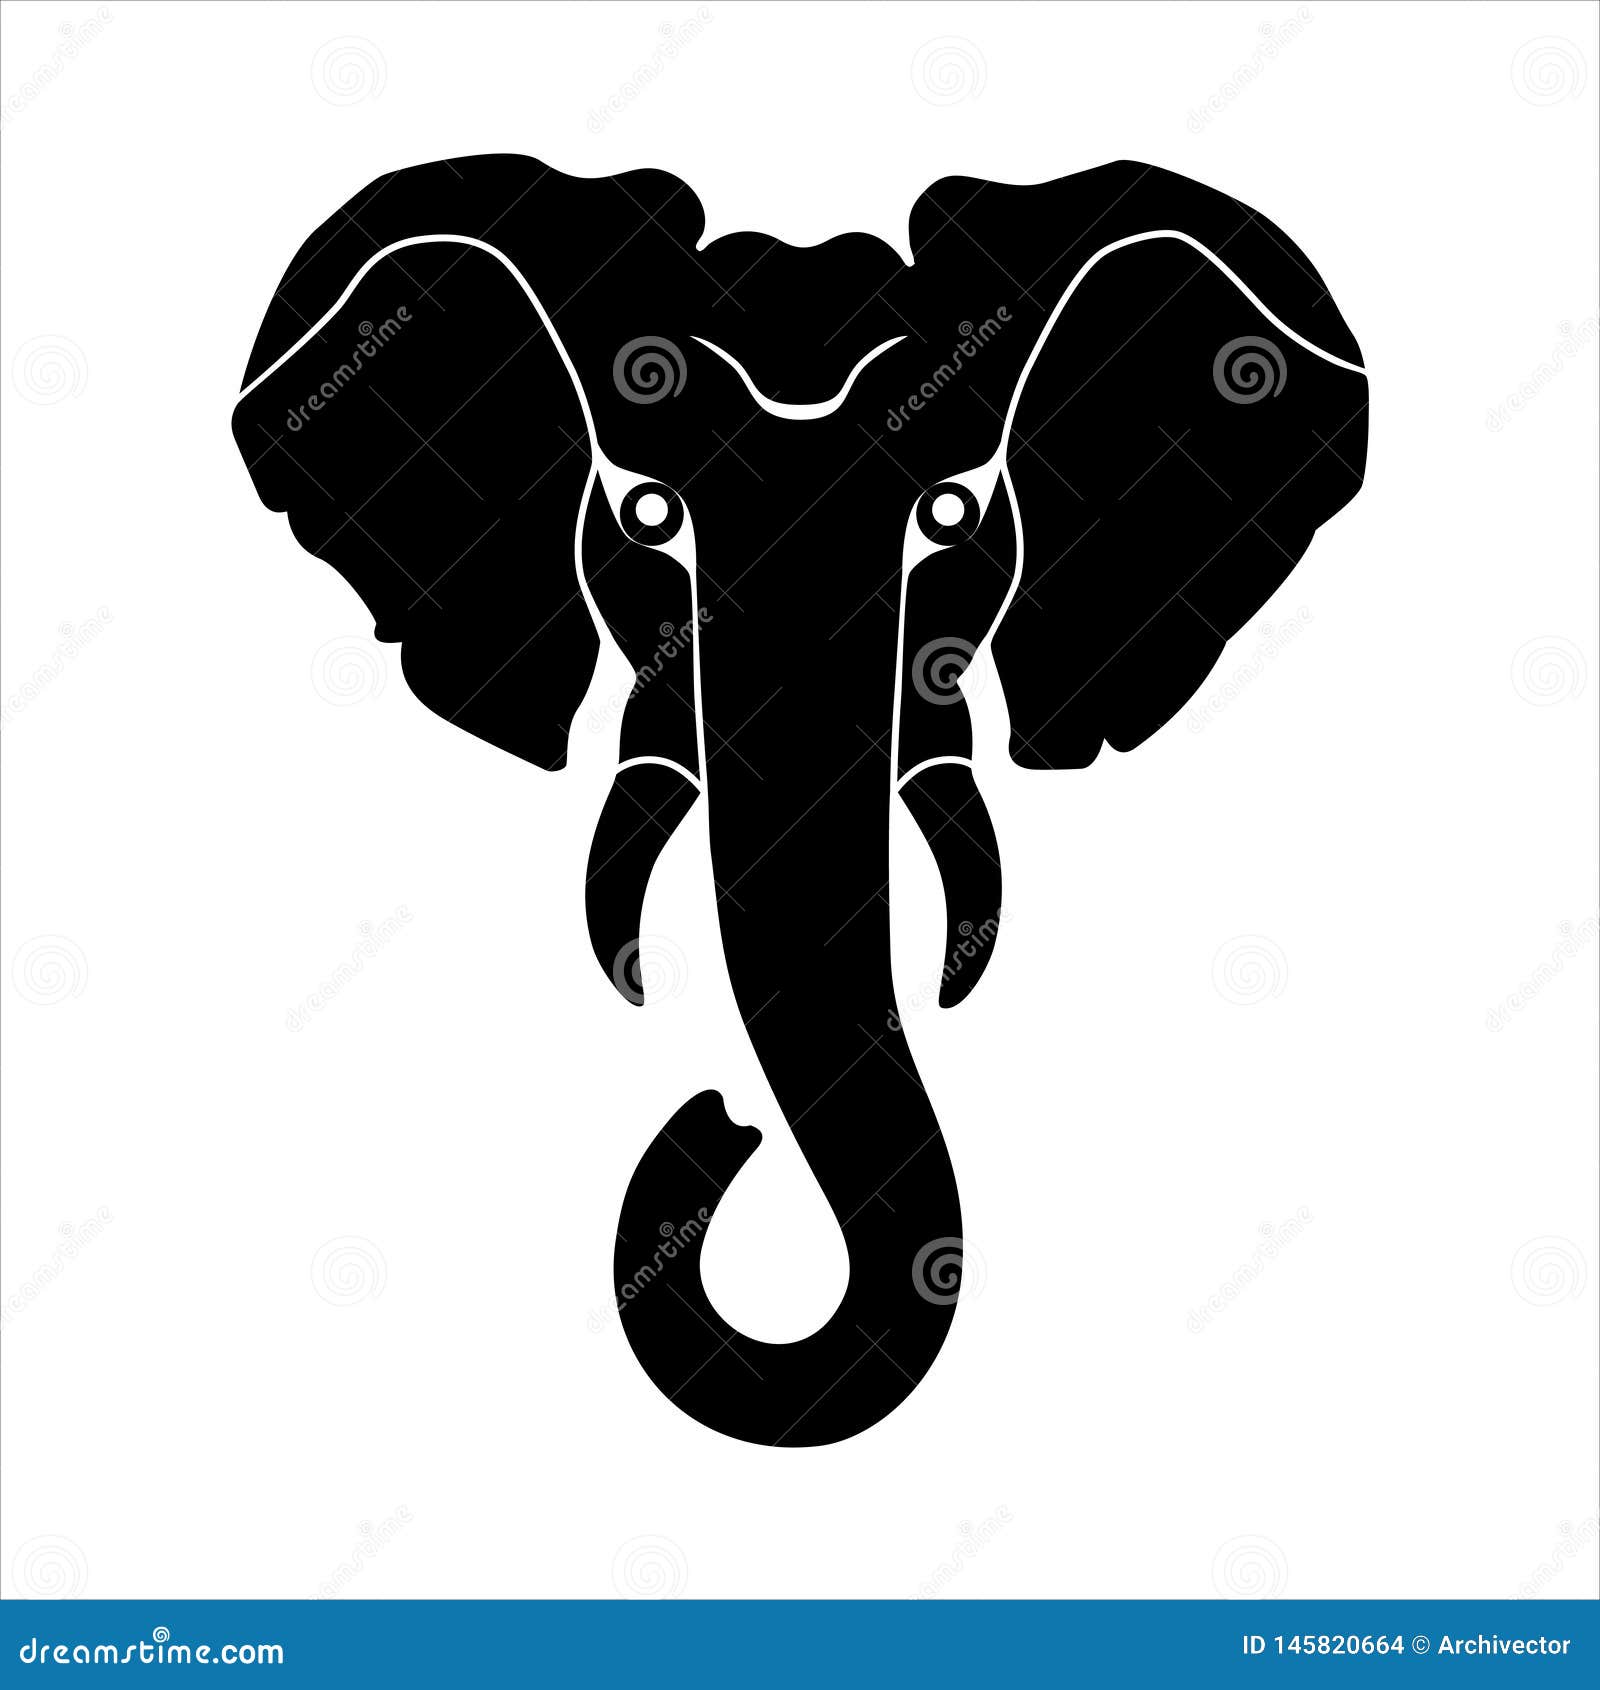 Elephant head black icon stock vector. Illustration of drawing - 145820664